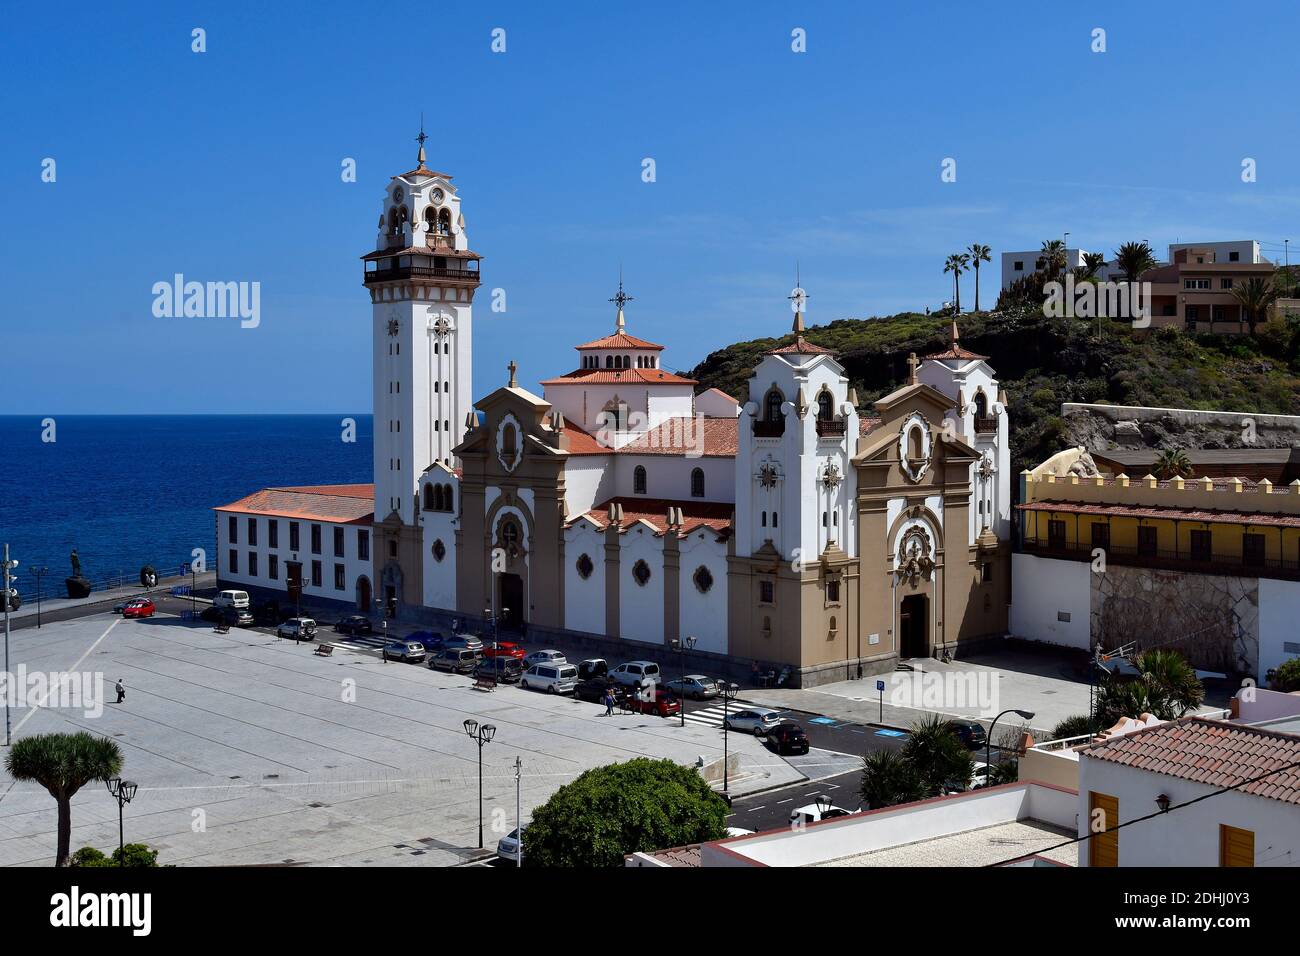 Teneriffa, Kanarische Inseln, Spanien - 06. April 2018: Basilica de Nuestro Senora de Candelaria und Bronzeskulptur auf dem Atlantischen Ozean im Dorf Candelari Stockfoto